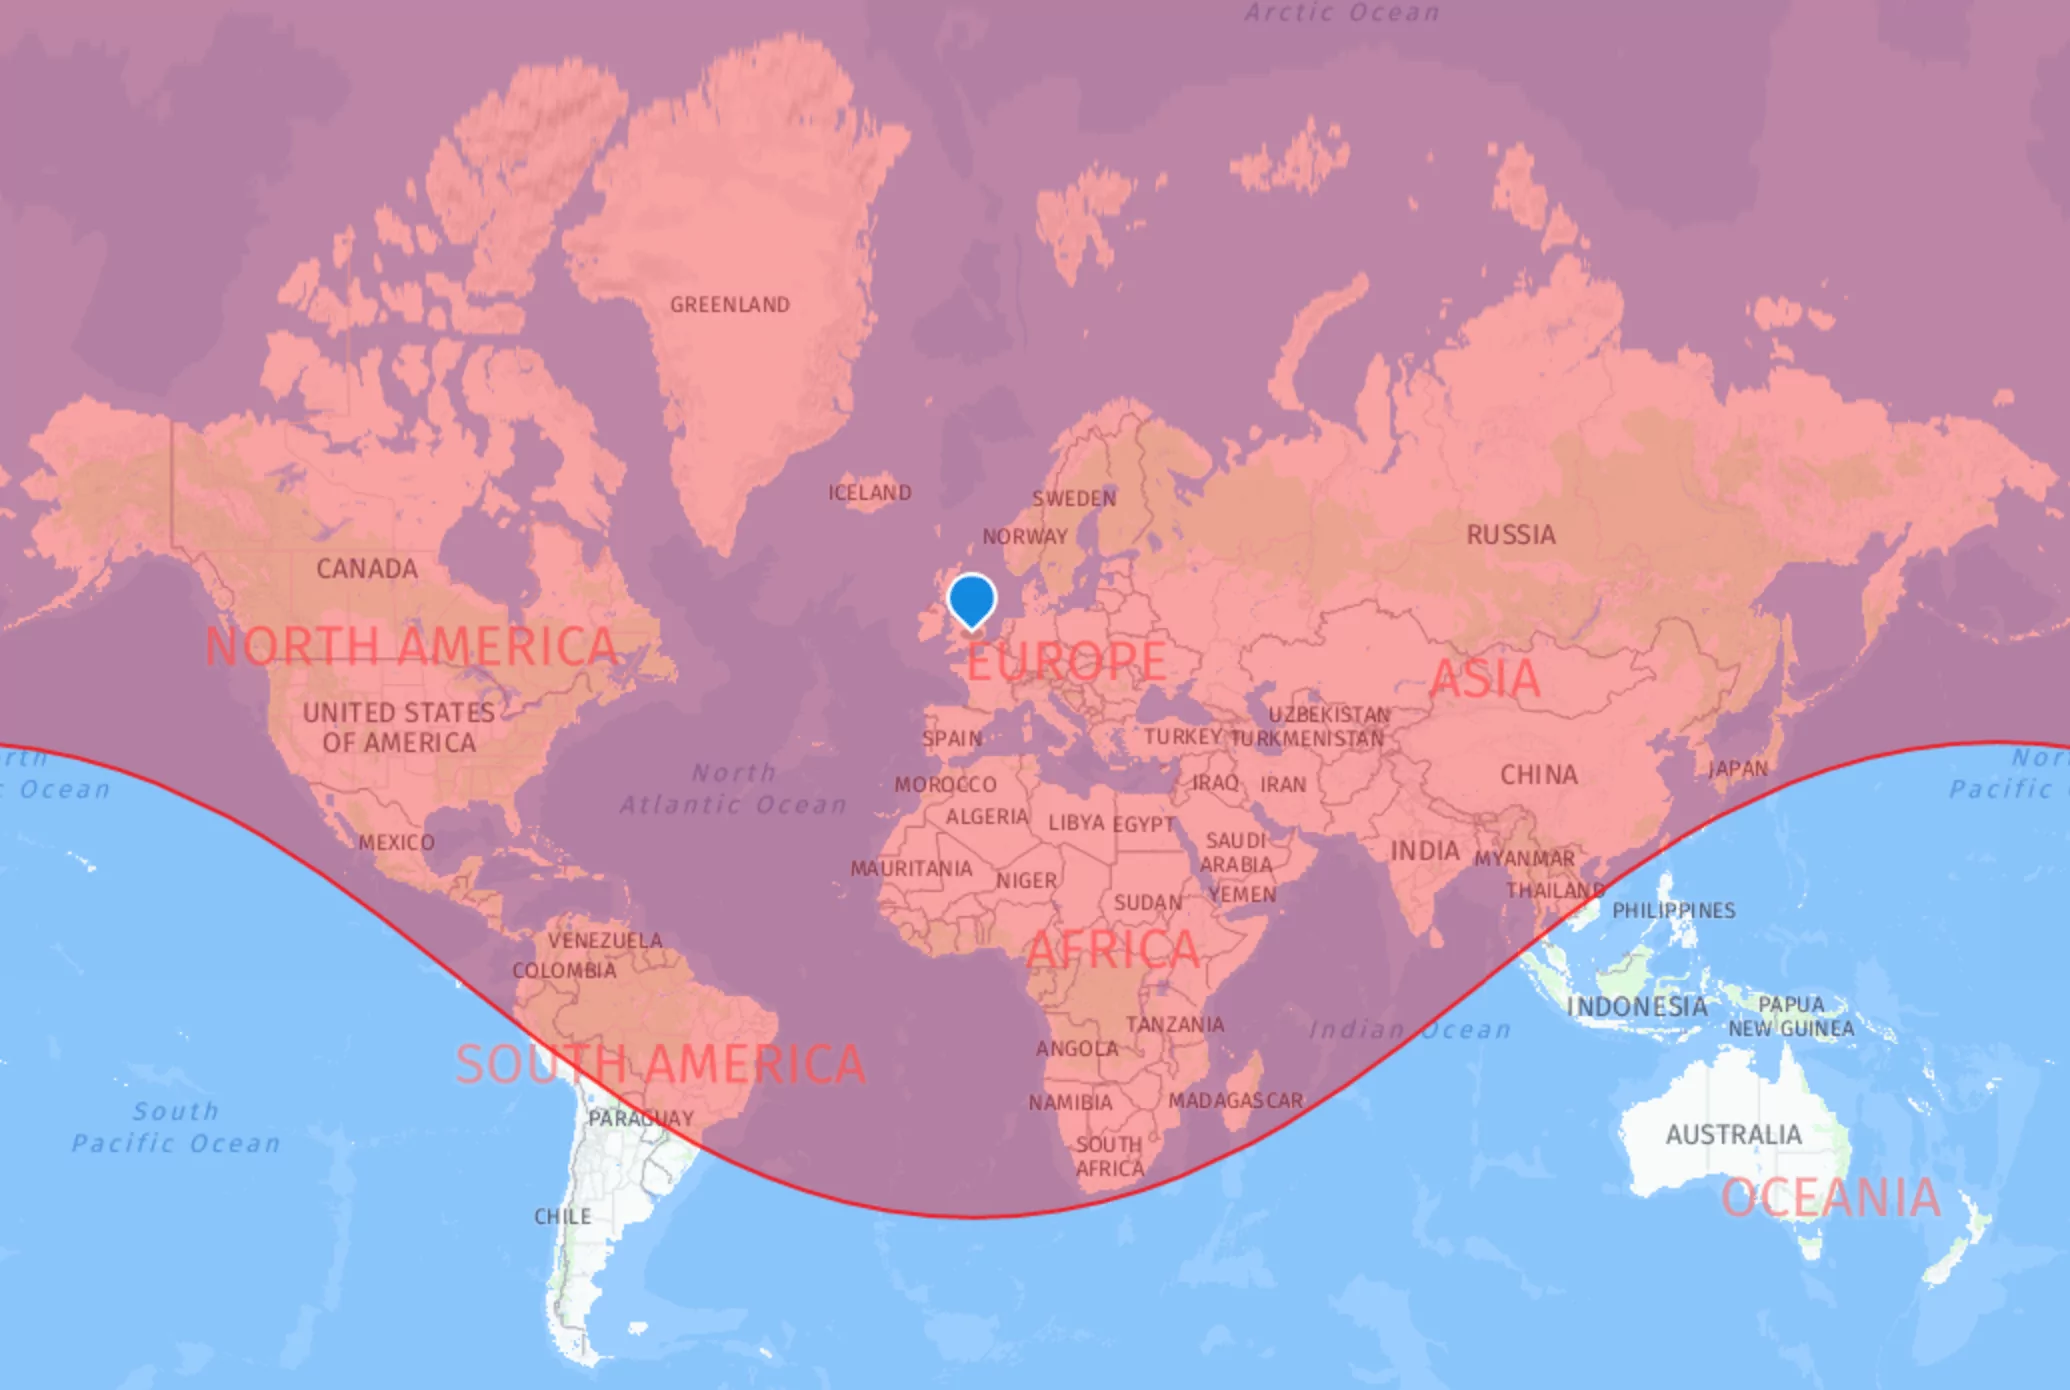 Dassault Falcon 7X Range Map with london as the origin city - range of 5950 nautical miles